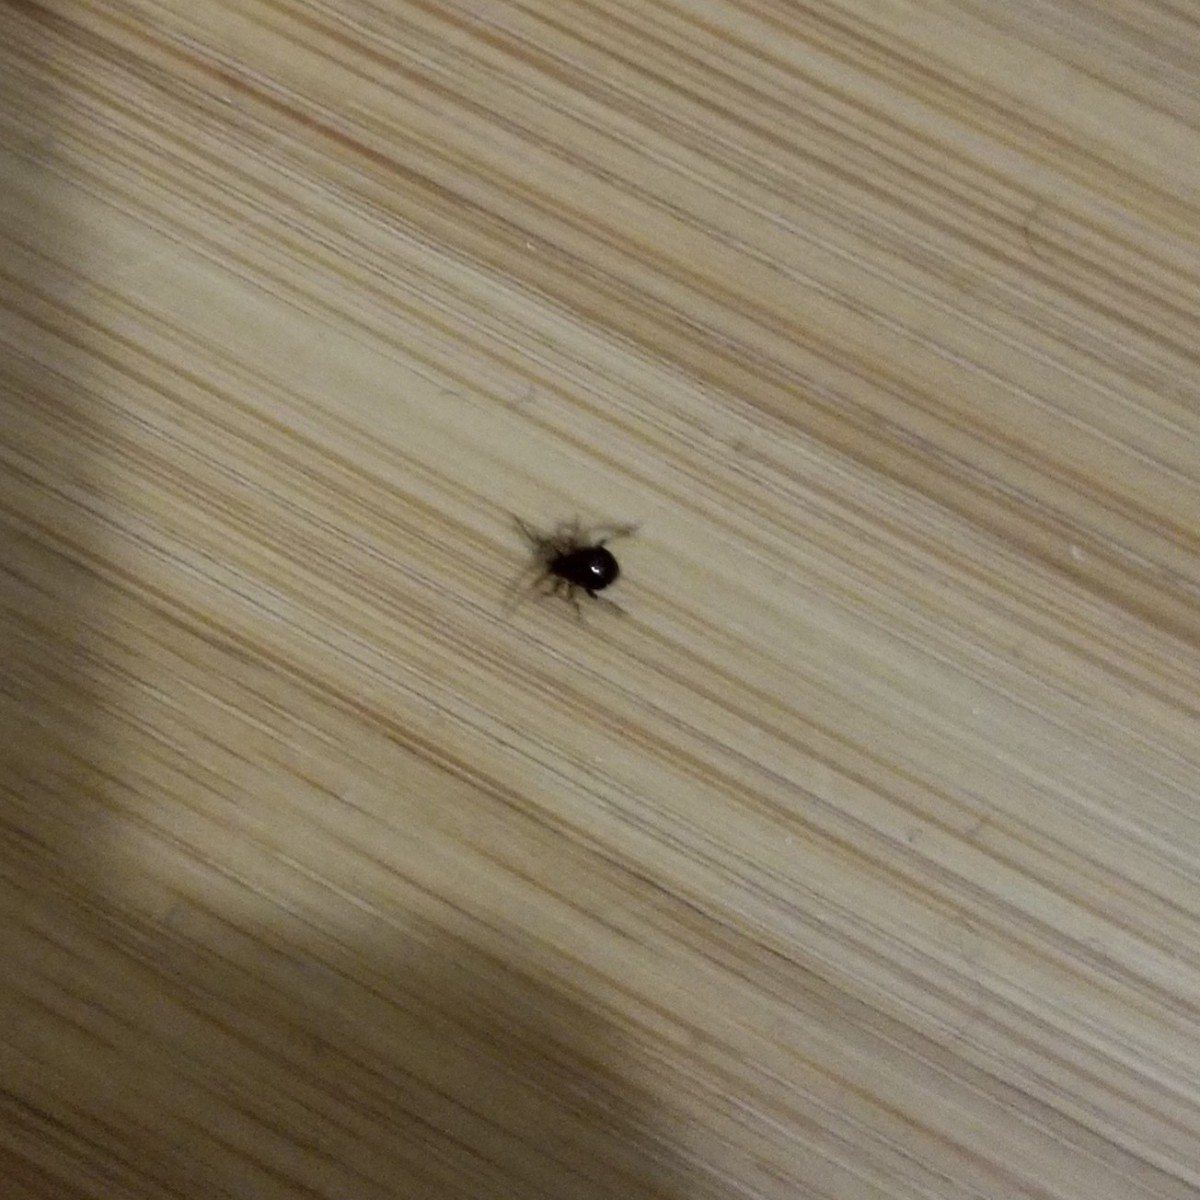 Identifying Small Black Bugs Thriftyfun - Vrogue